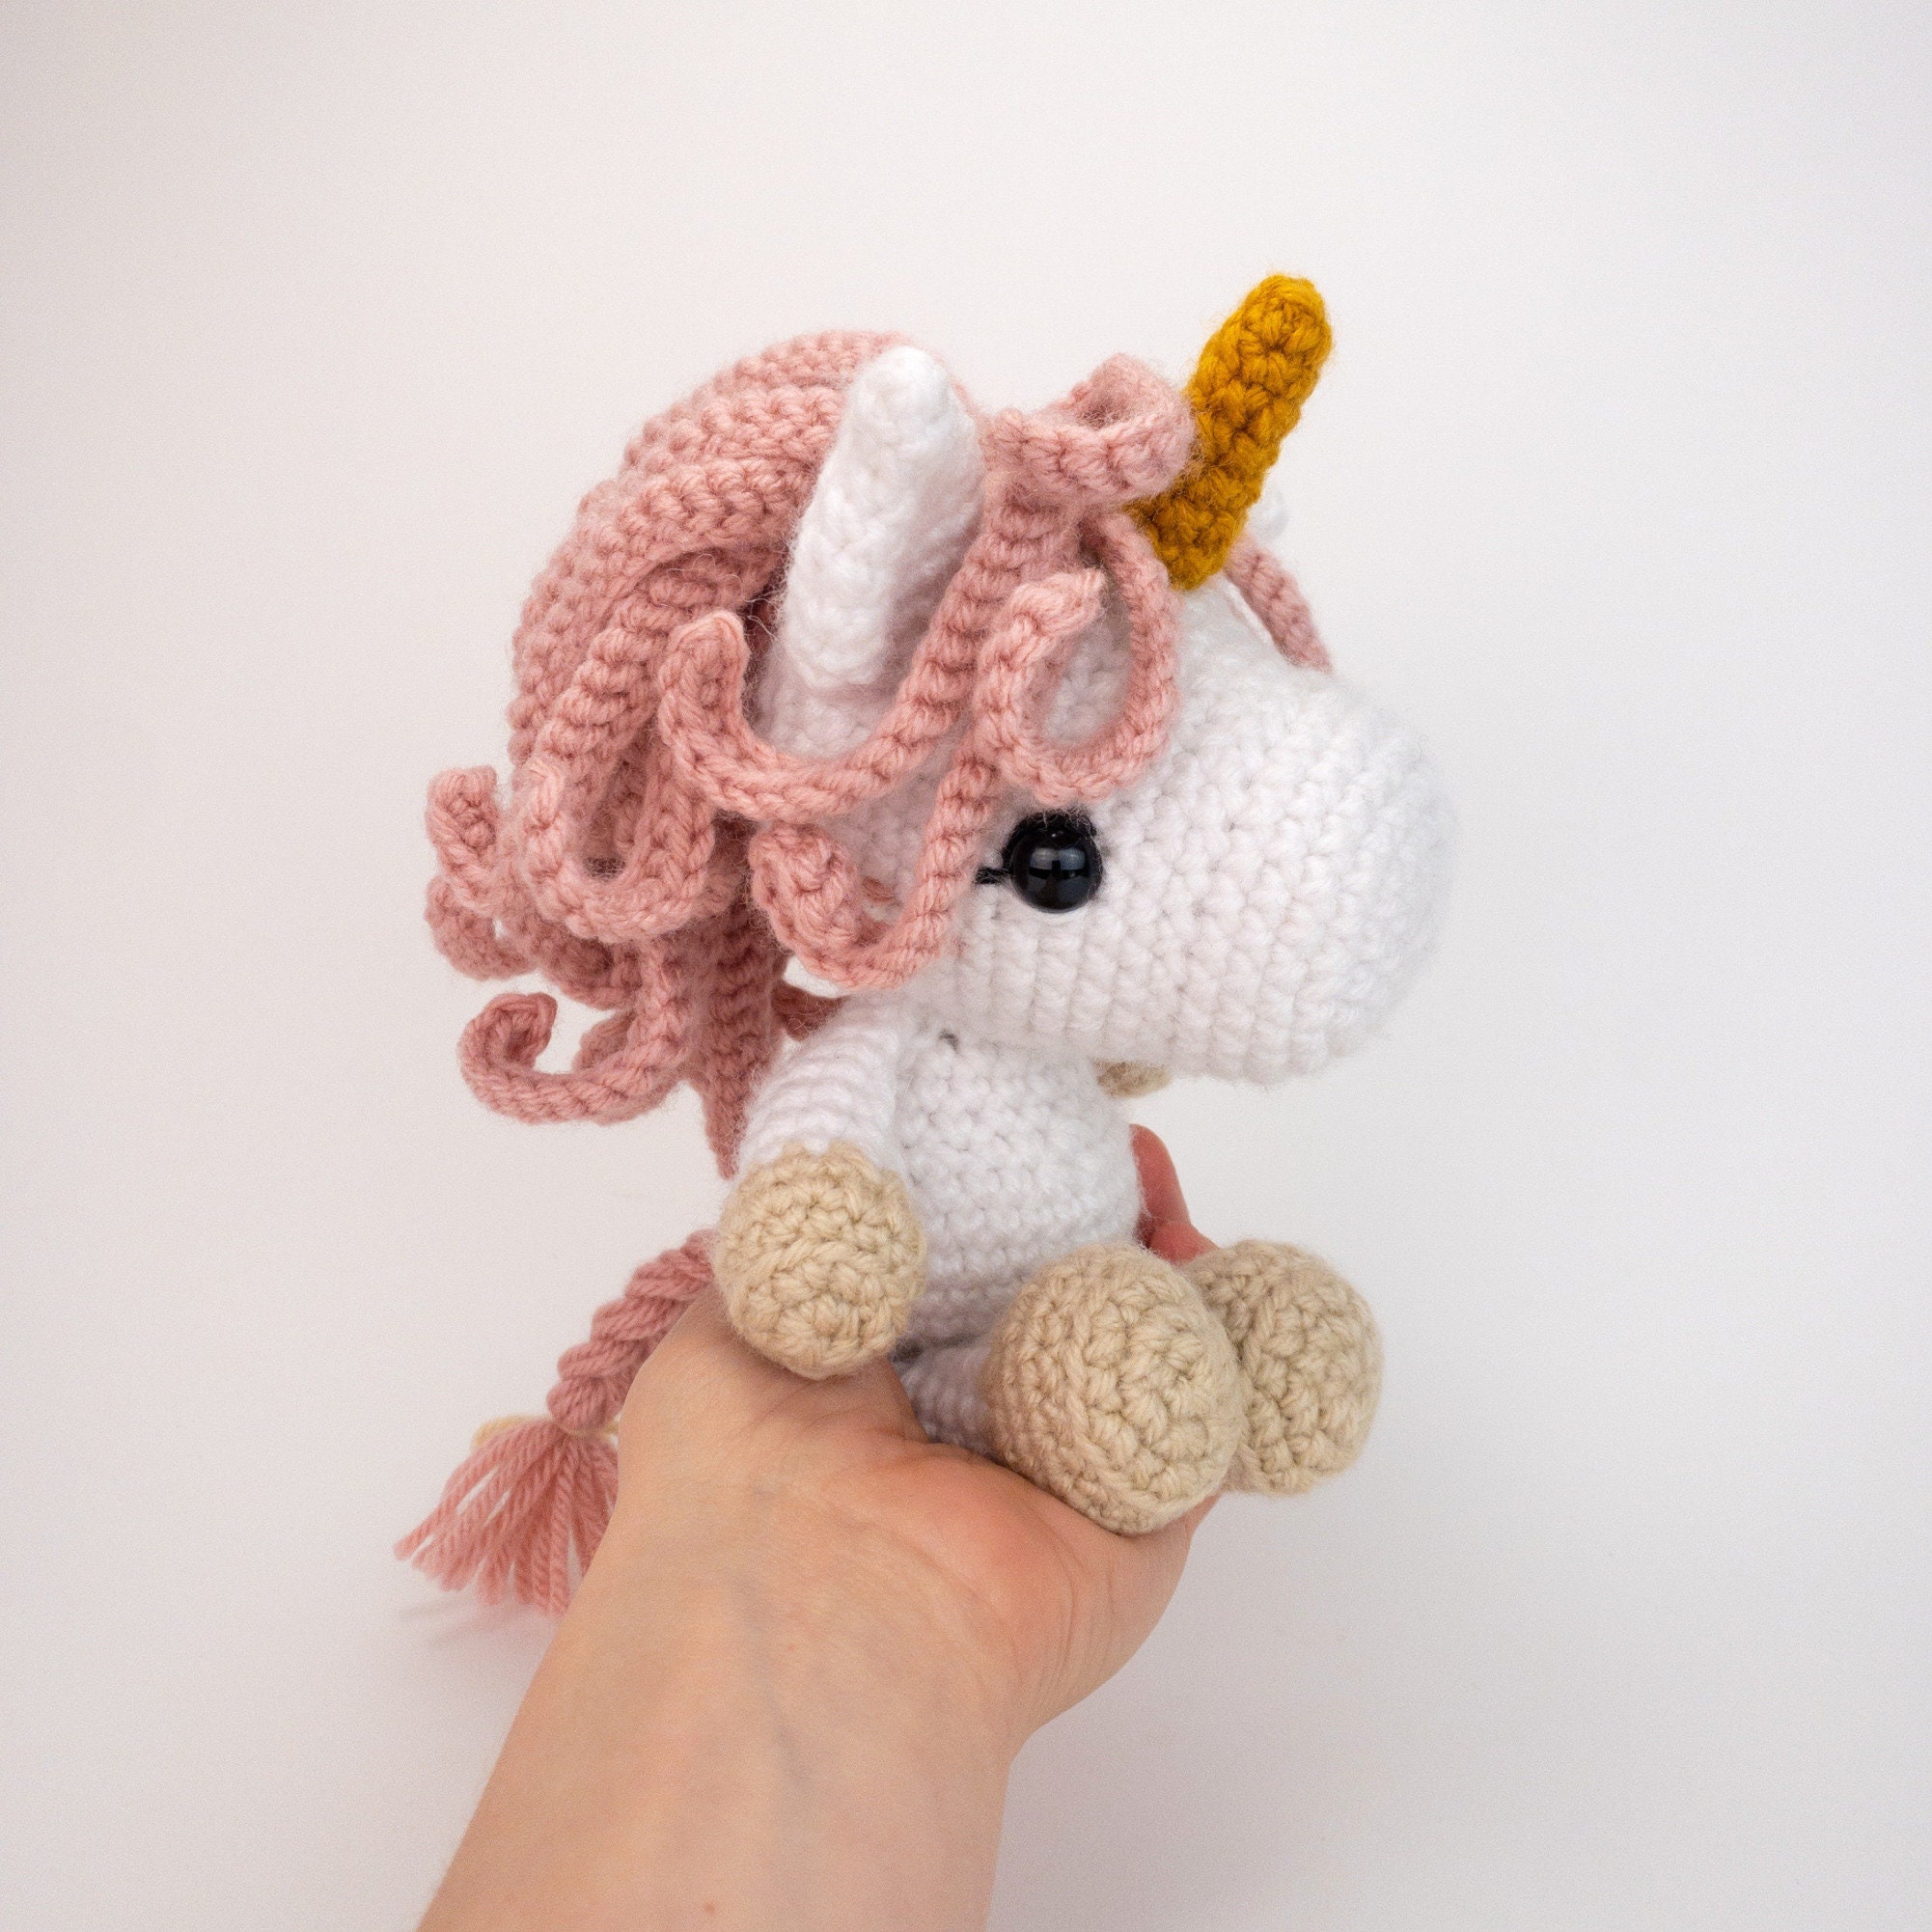 Amigurumi Hook Size & Yarn Weight Guide - Tiny Curl Crochet